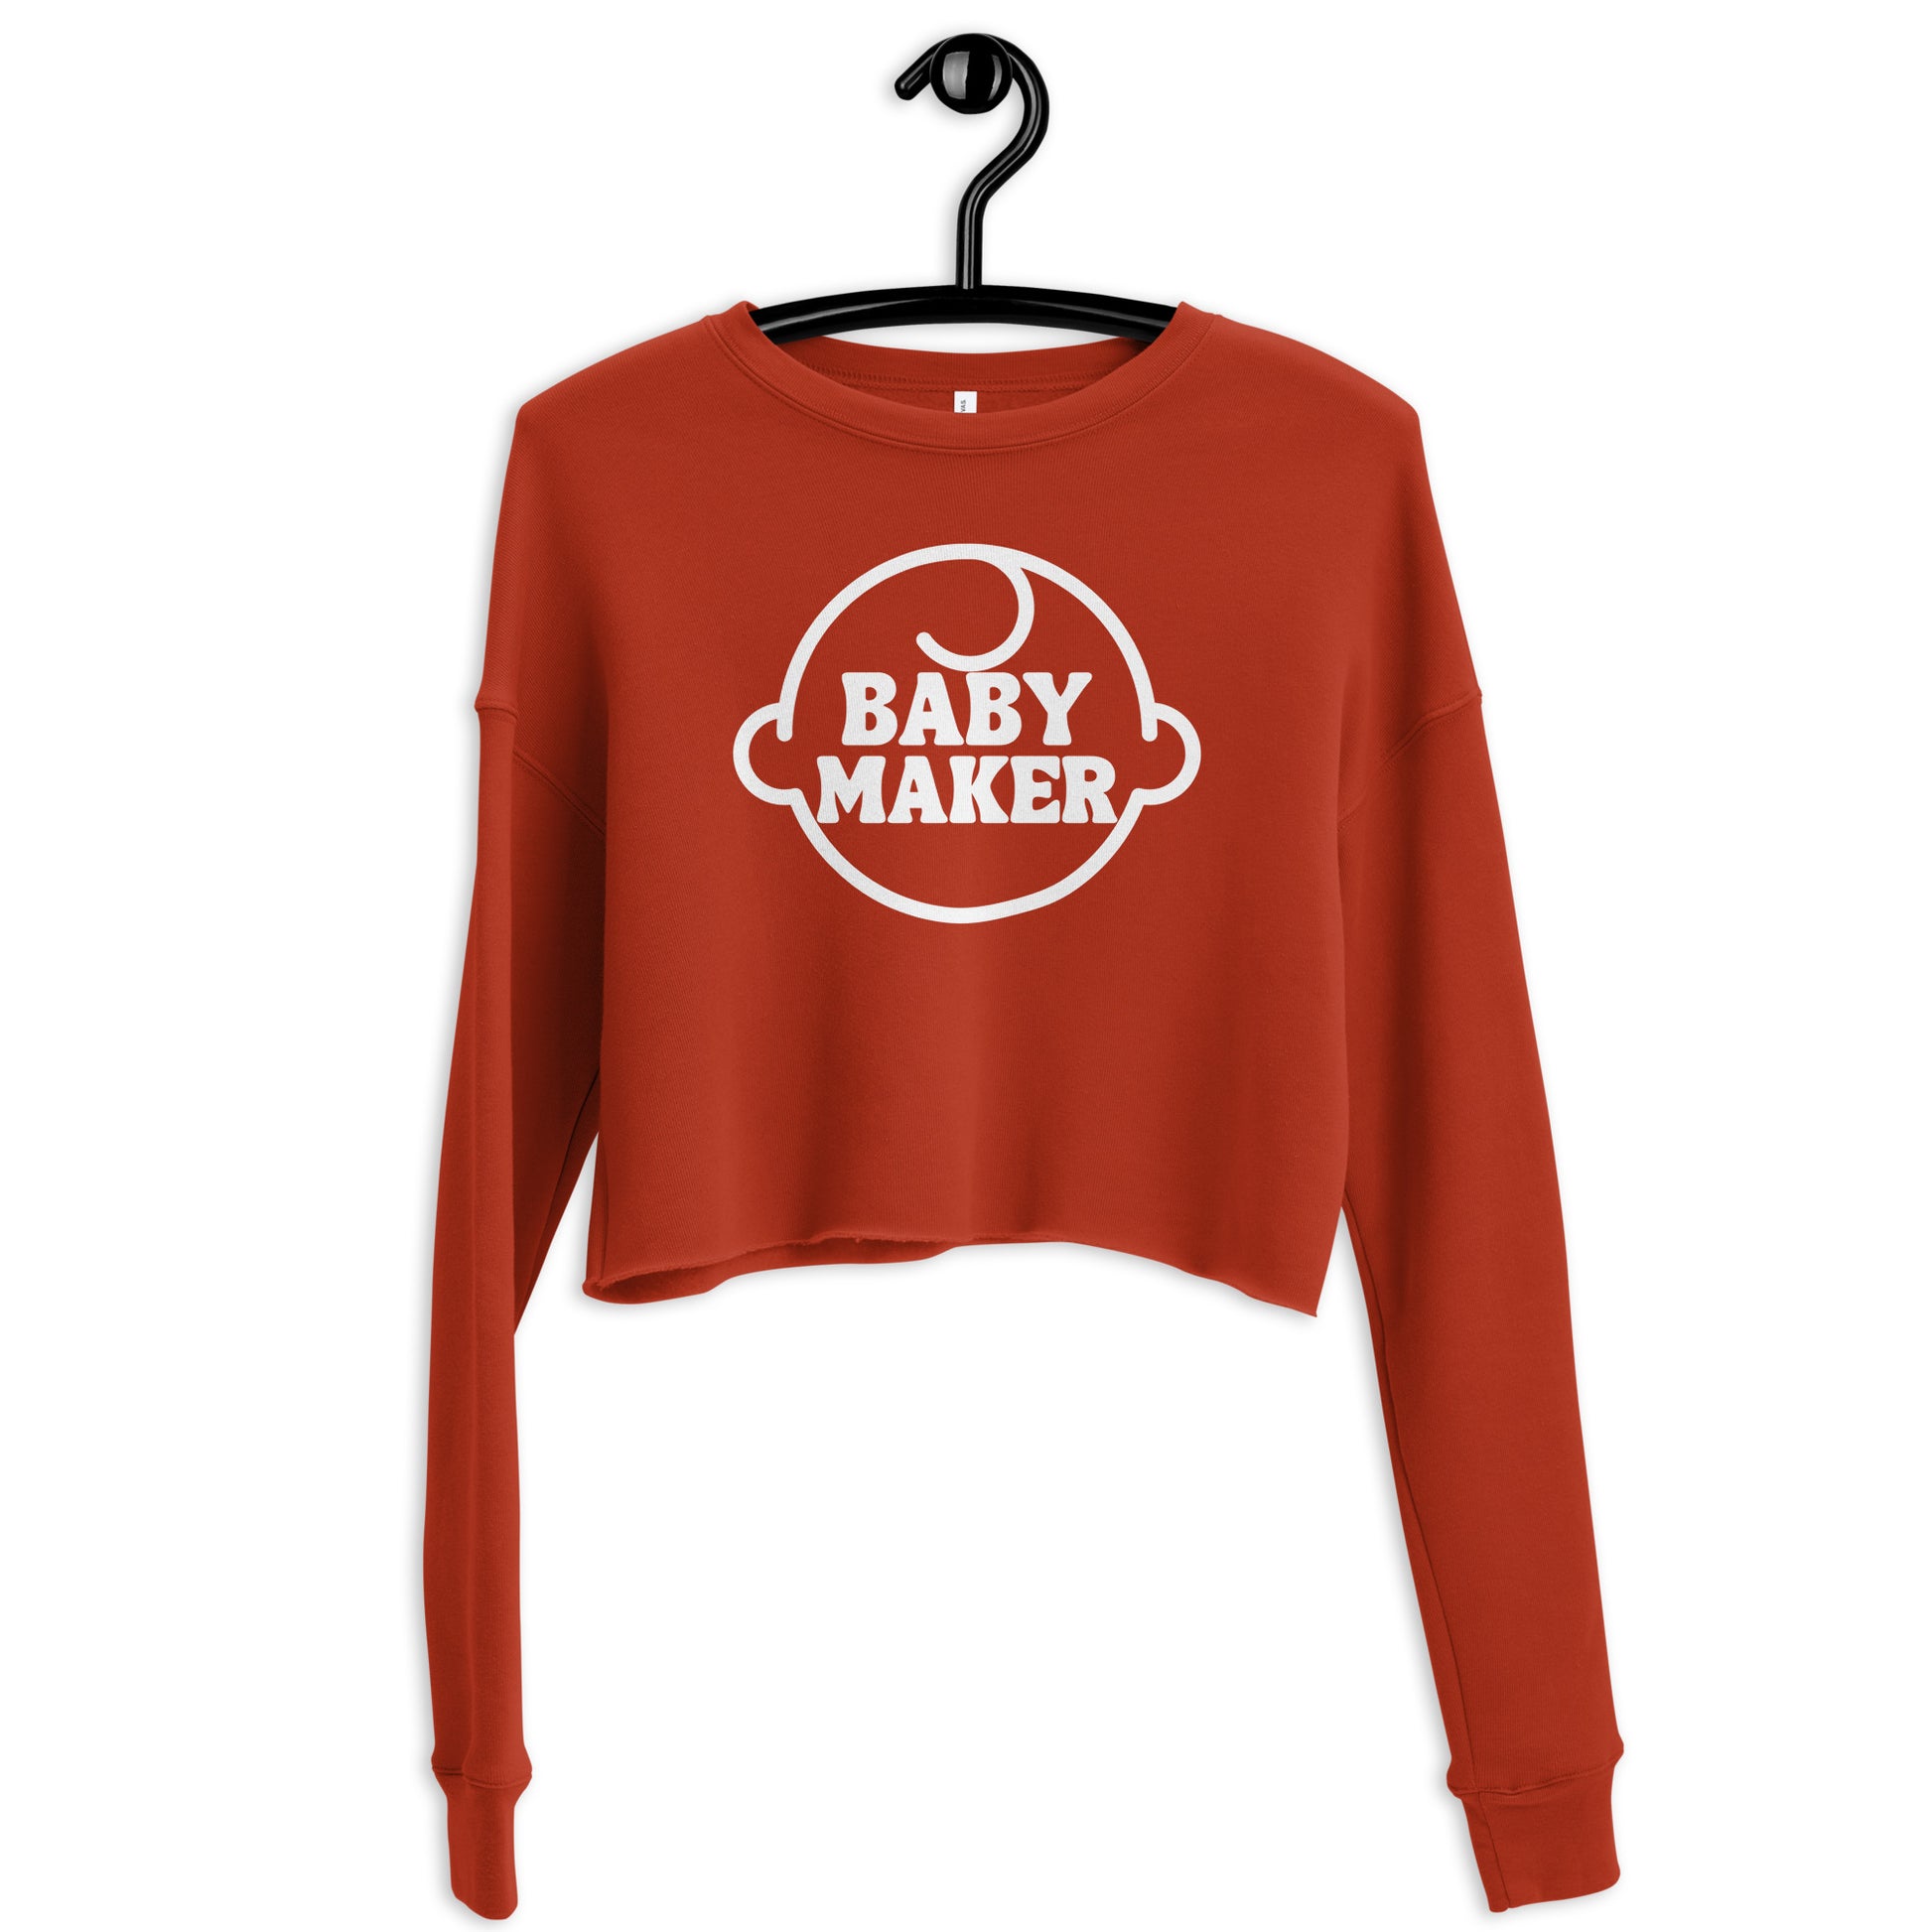 Baby Maker Cropped Sweatshirt in Brick